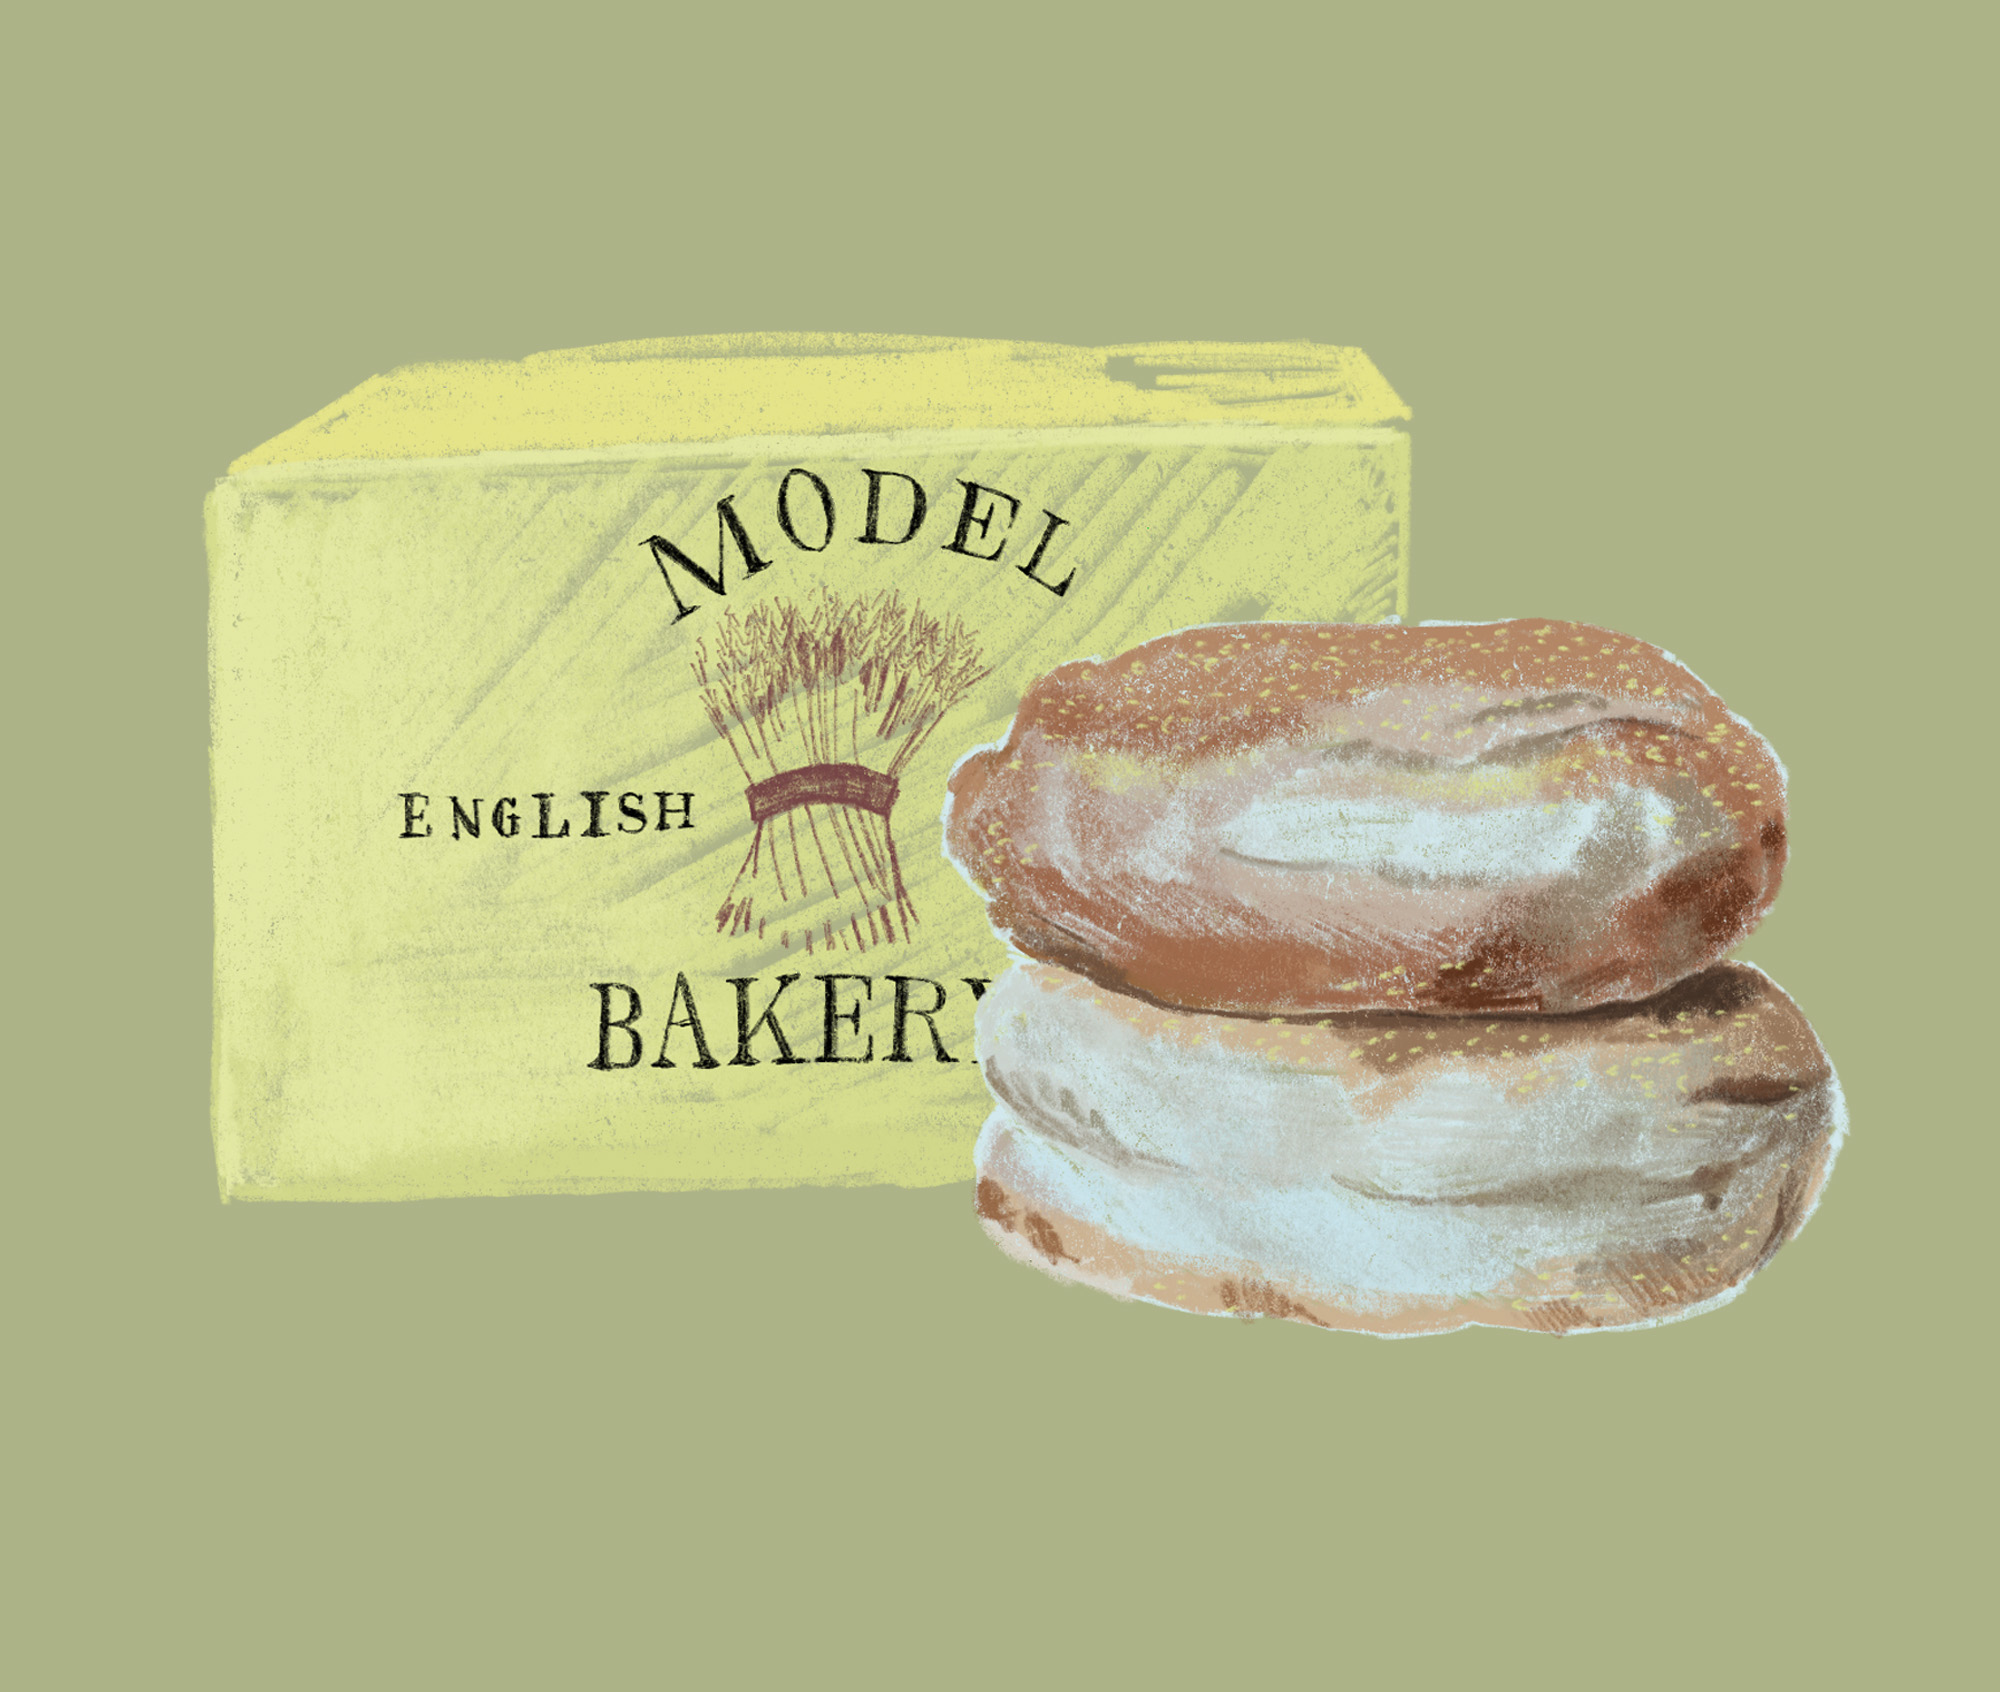 Model Bakery English Muffins